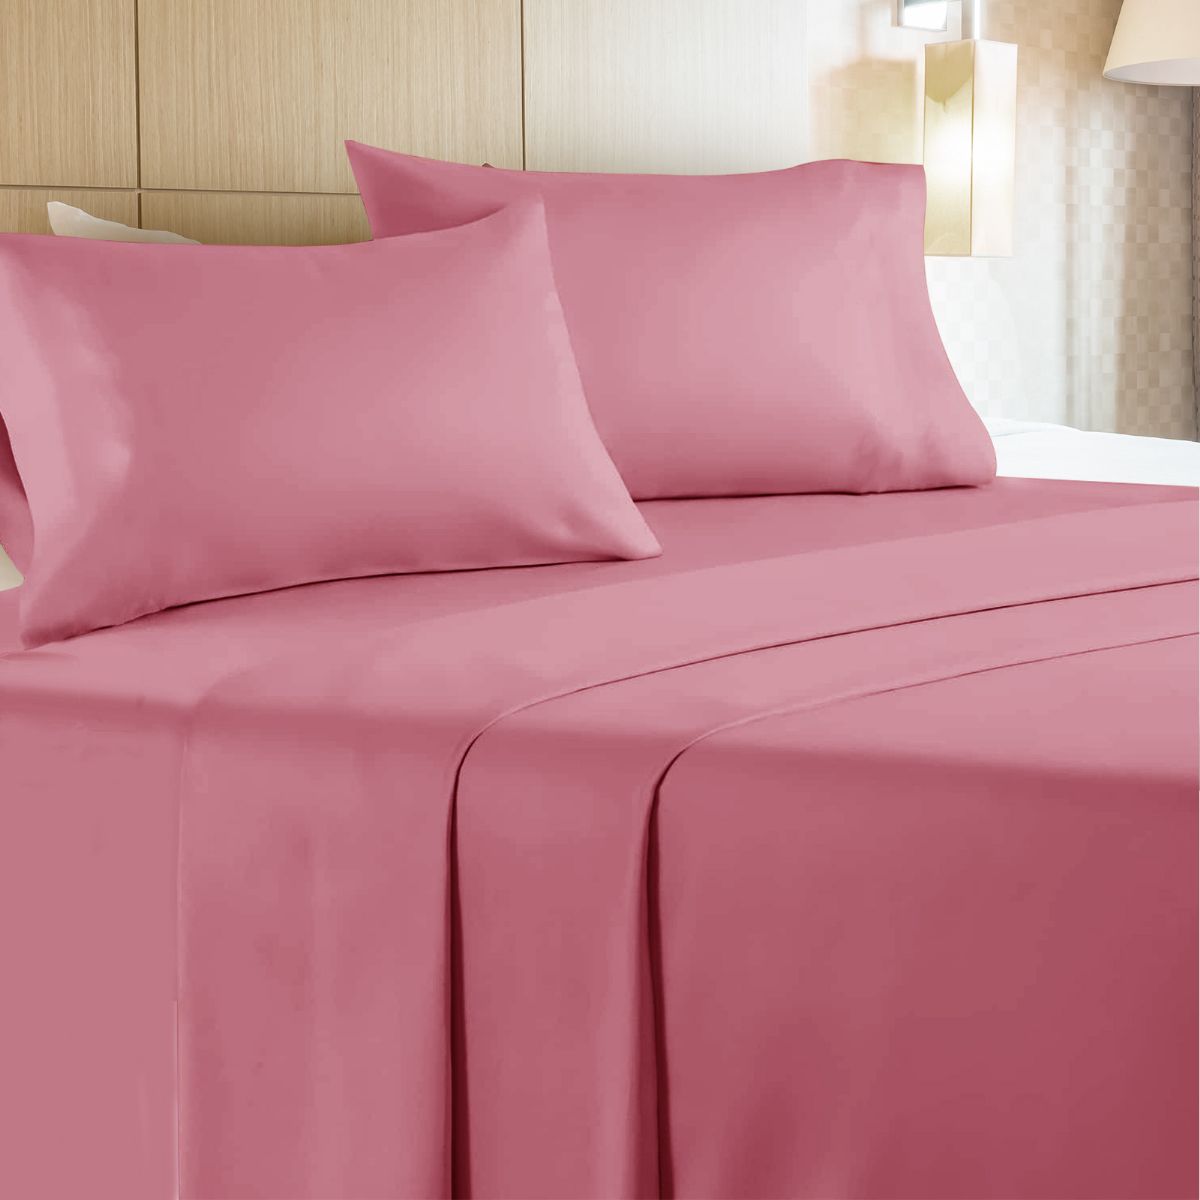 6 Wholesale 4 Piece Microfiber Bed Sheet Set Twin Size In Maroon